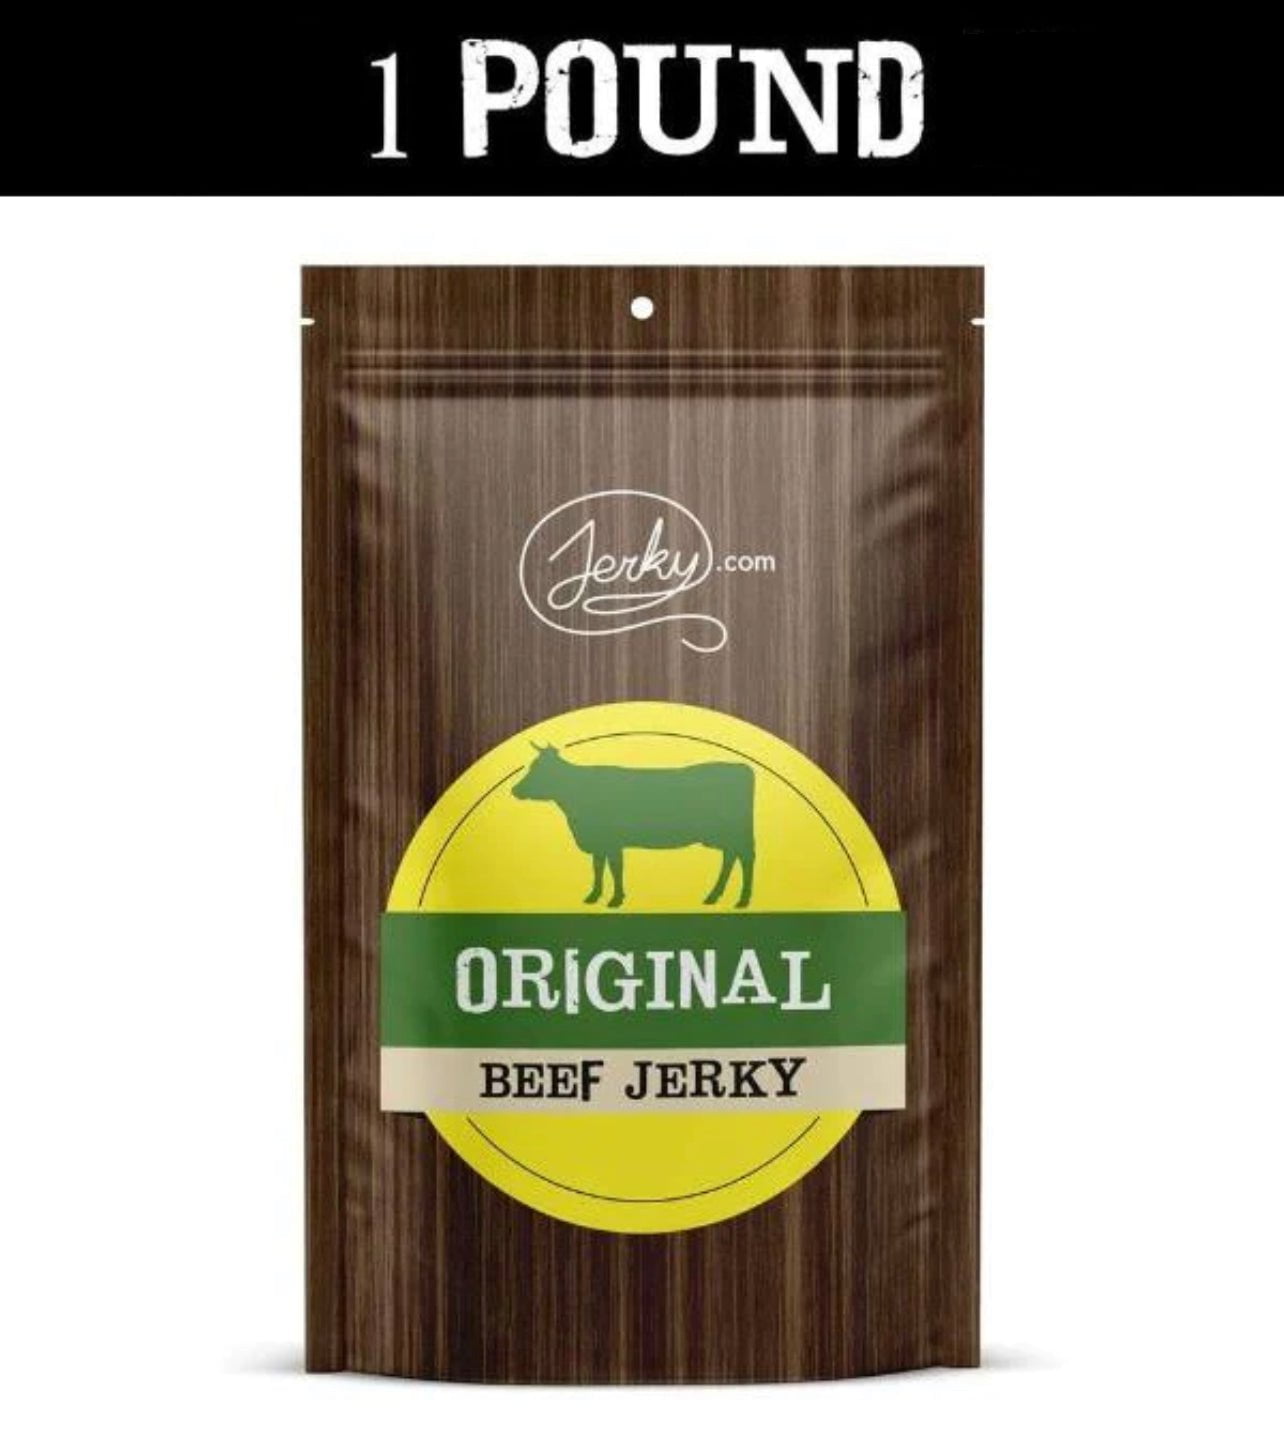 All-Natural Beef Jerky - Original - 1 Pound by Jerky.com